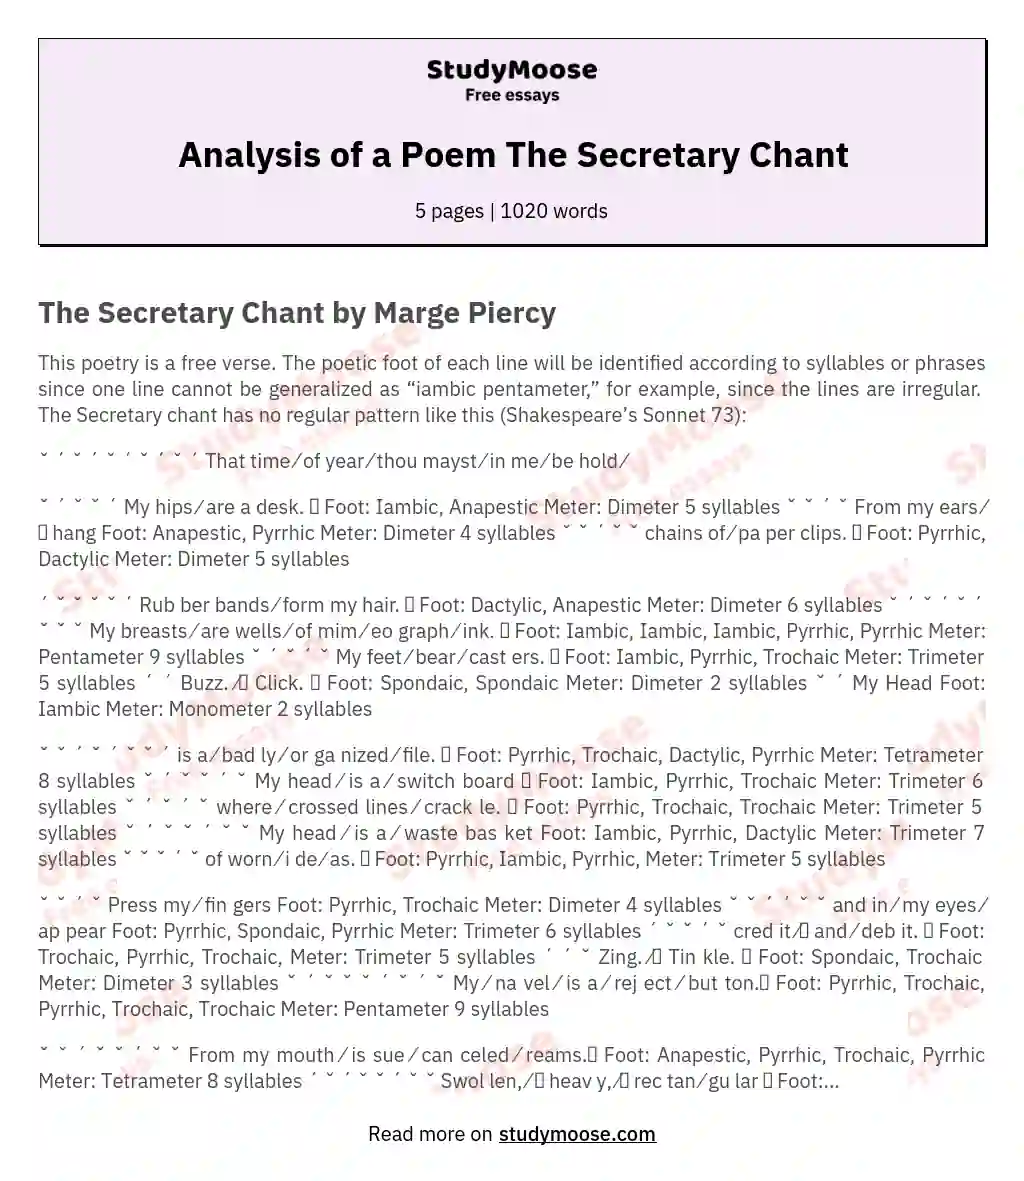 Analysis of a Poem The Secretary Chant